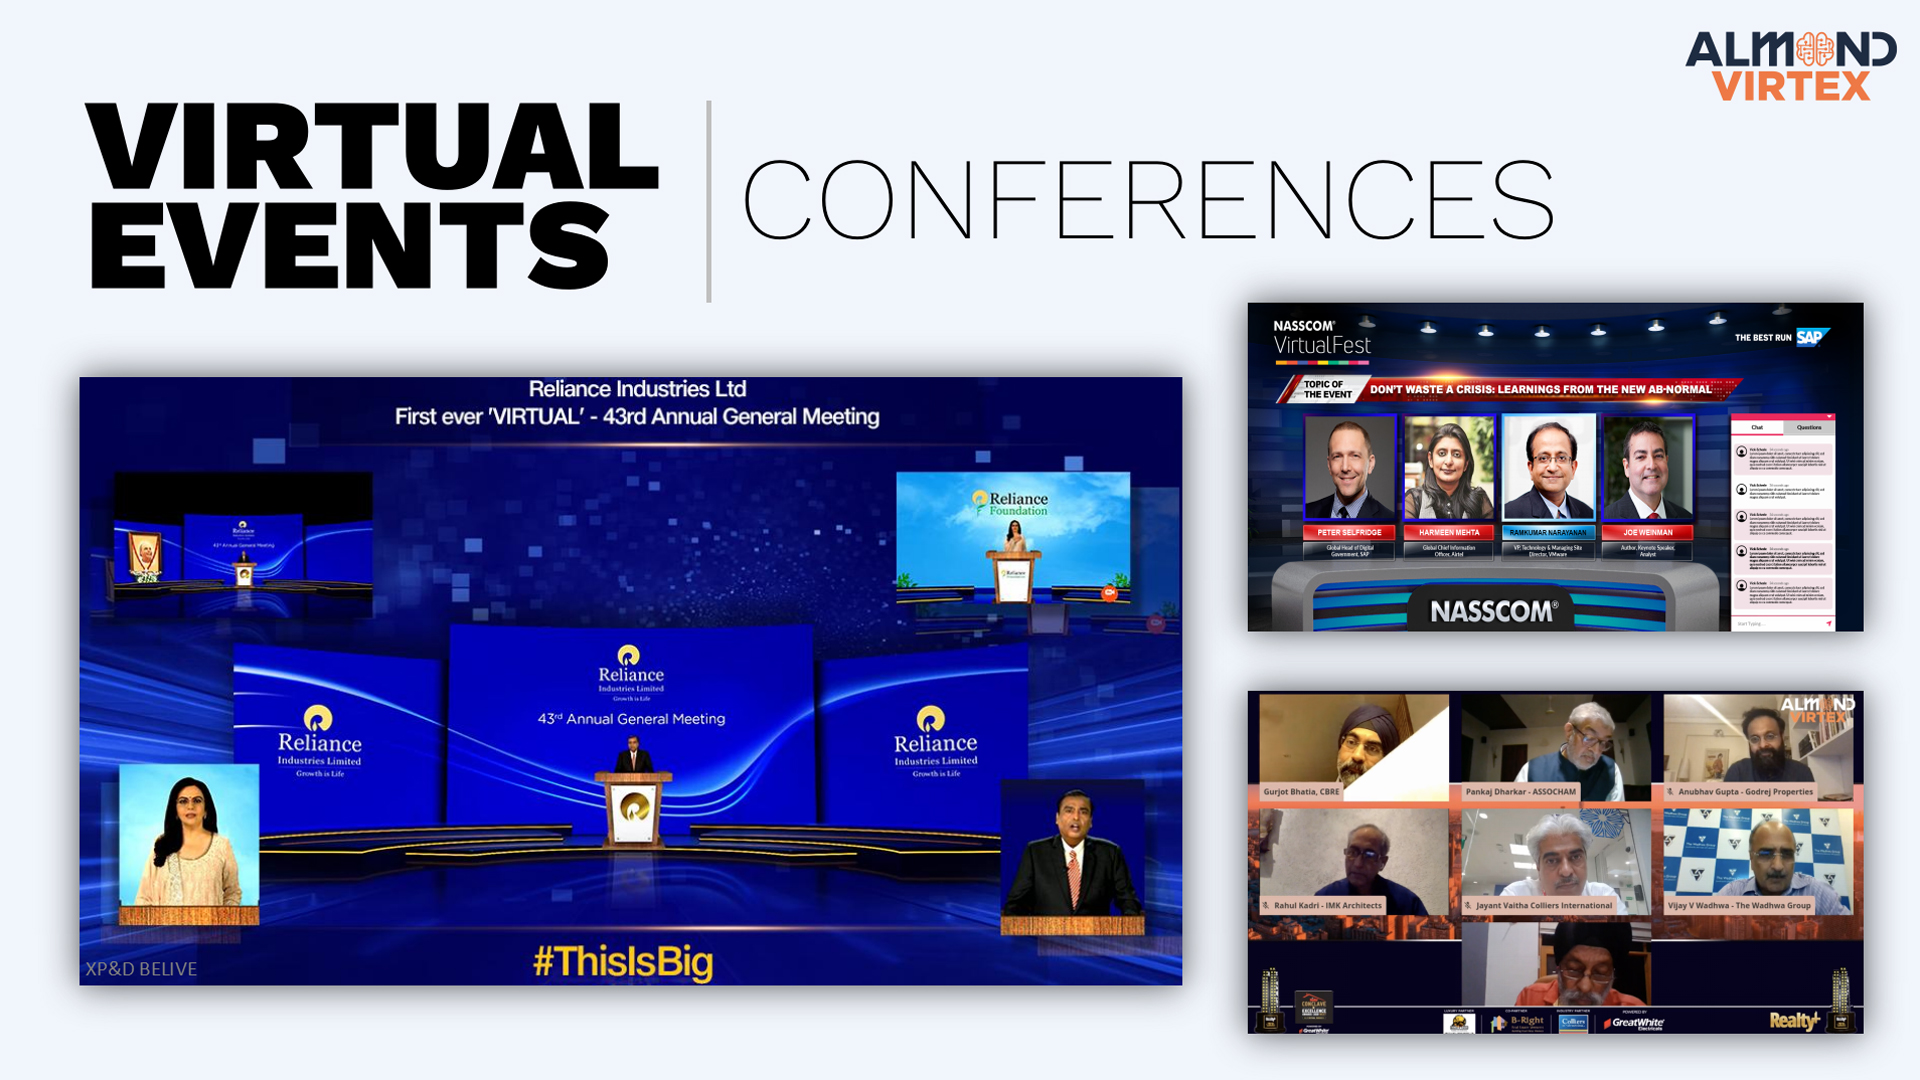 Almond Virtex Virtual Event Platform - Conferences